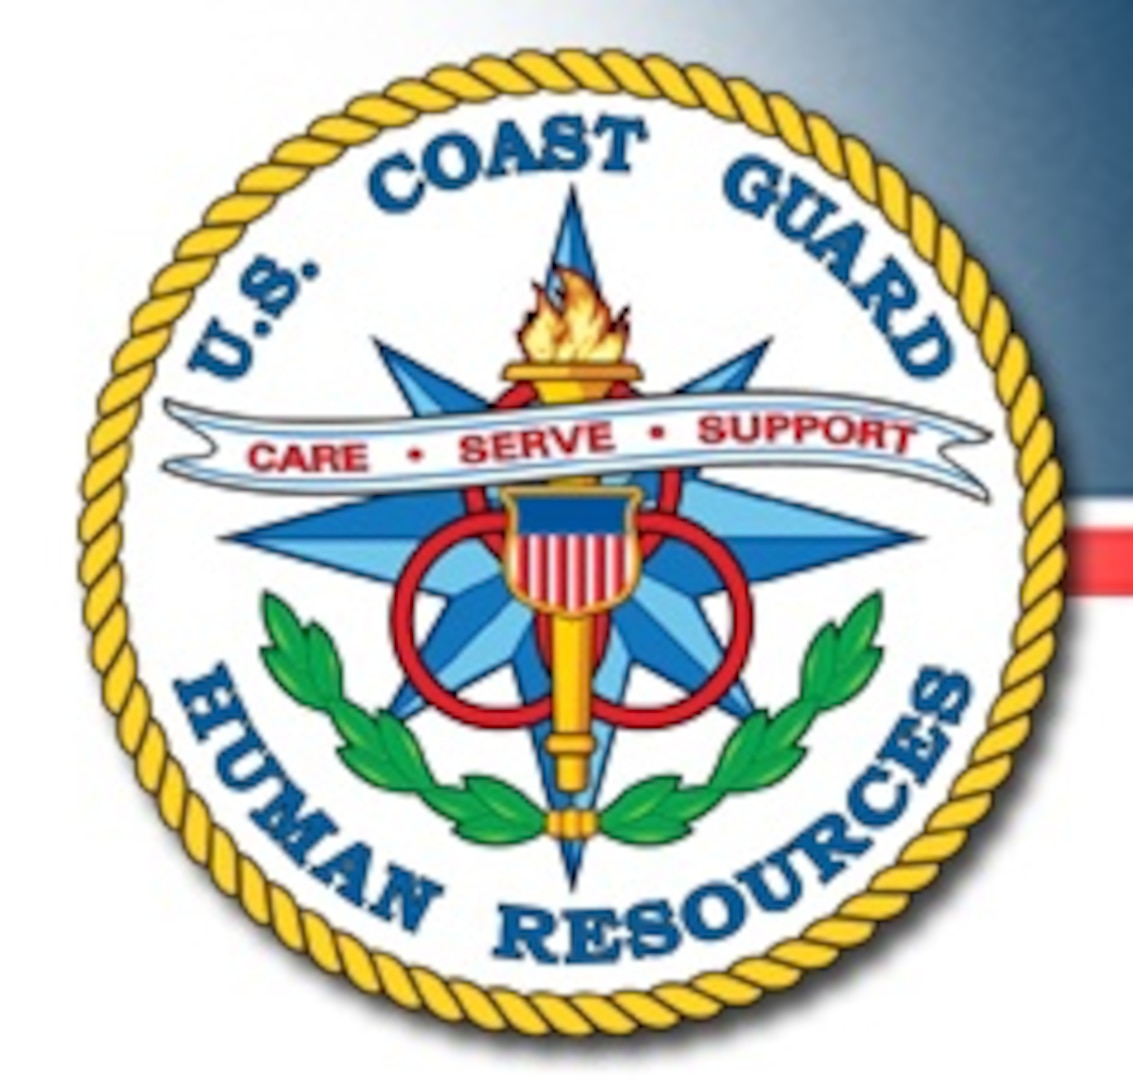 CG-1 logo